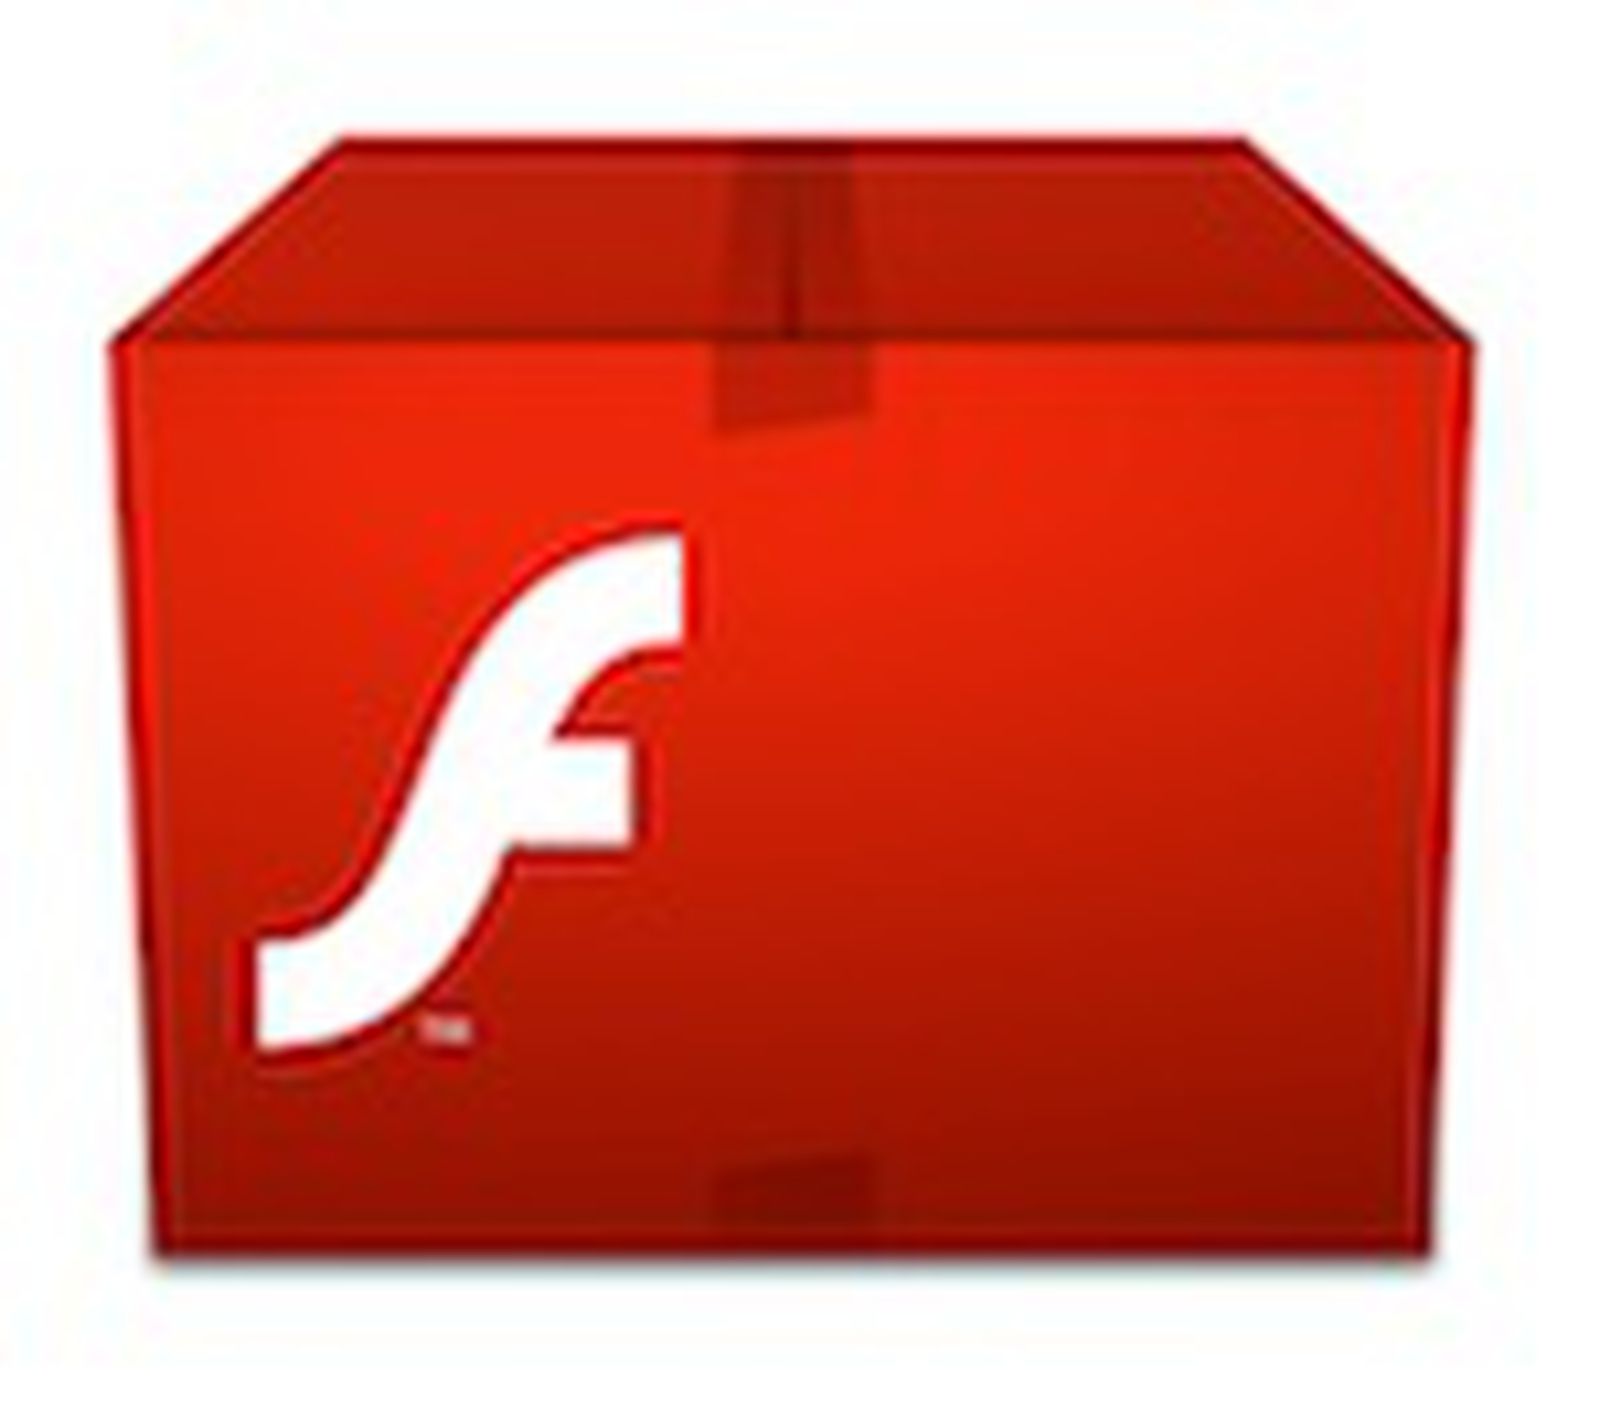 adobe flash player 64 bit